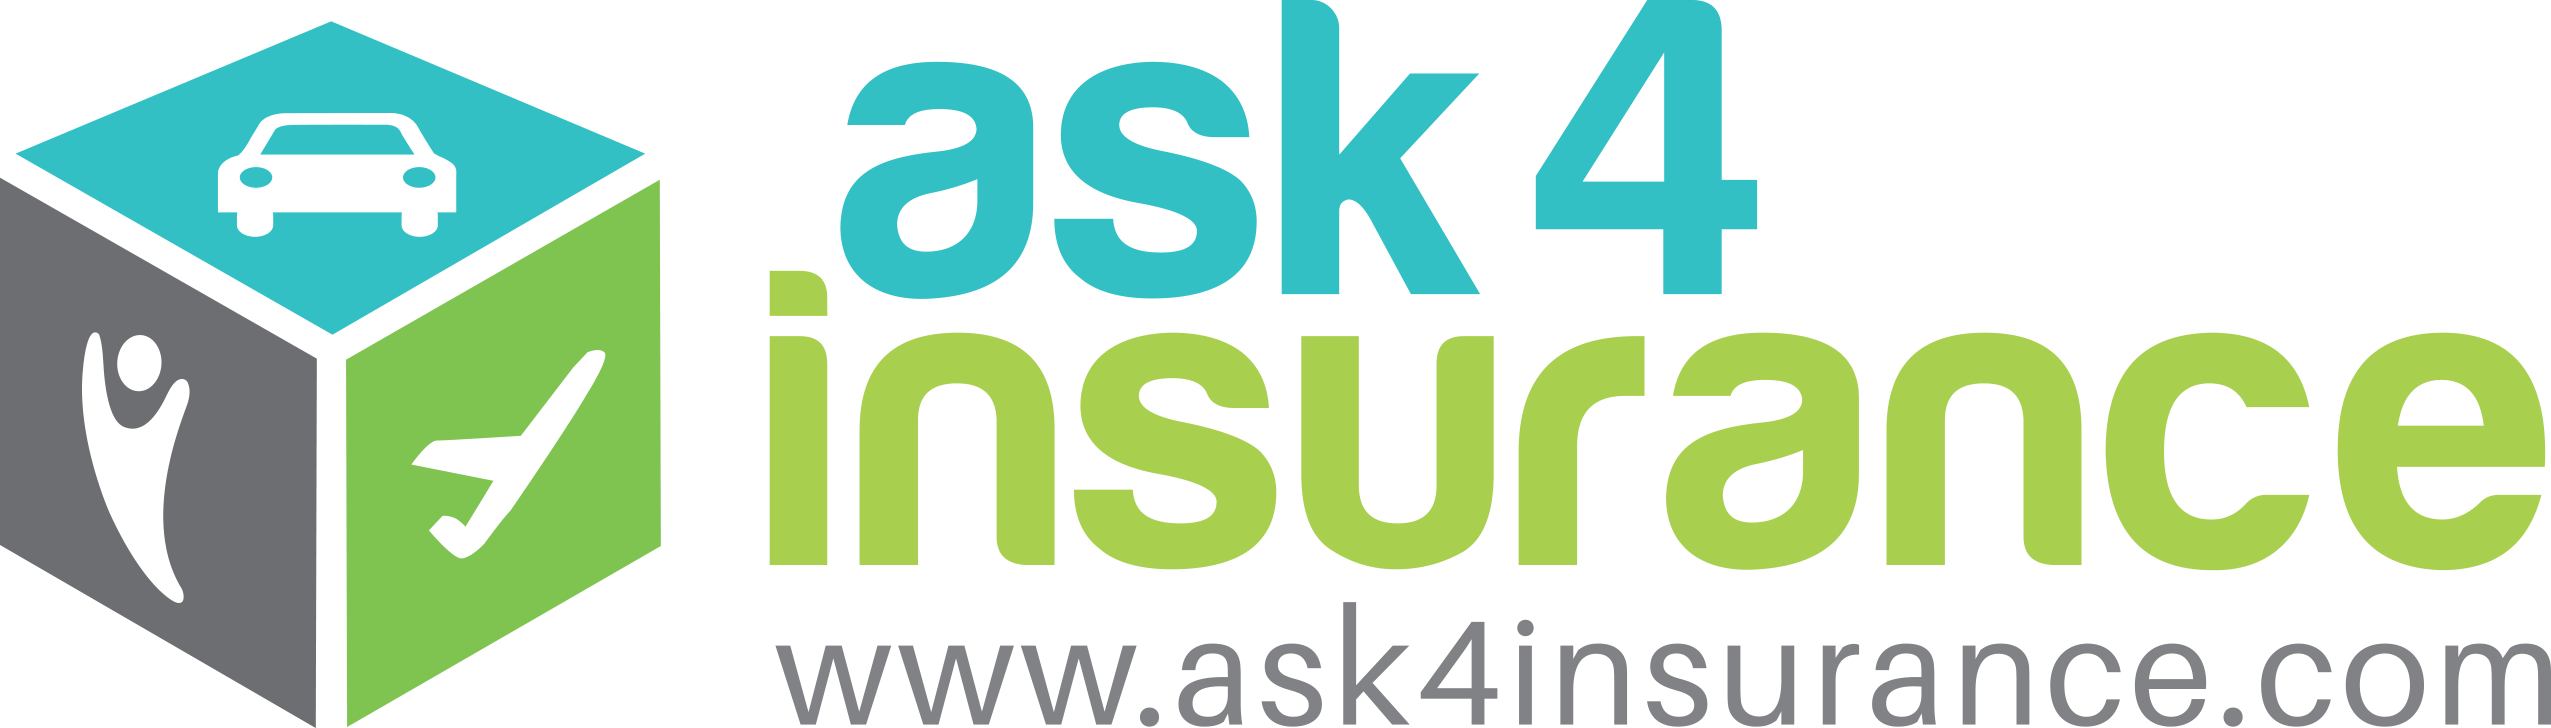 Ask4insurance